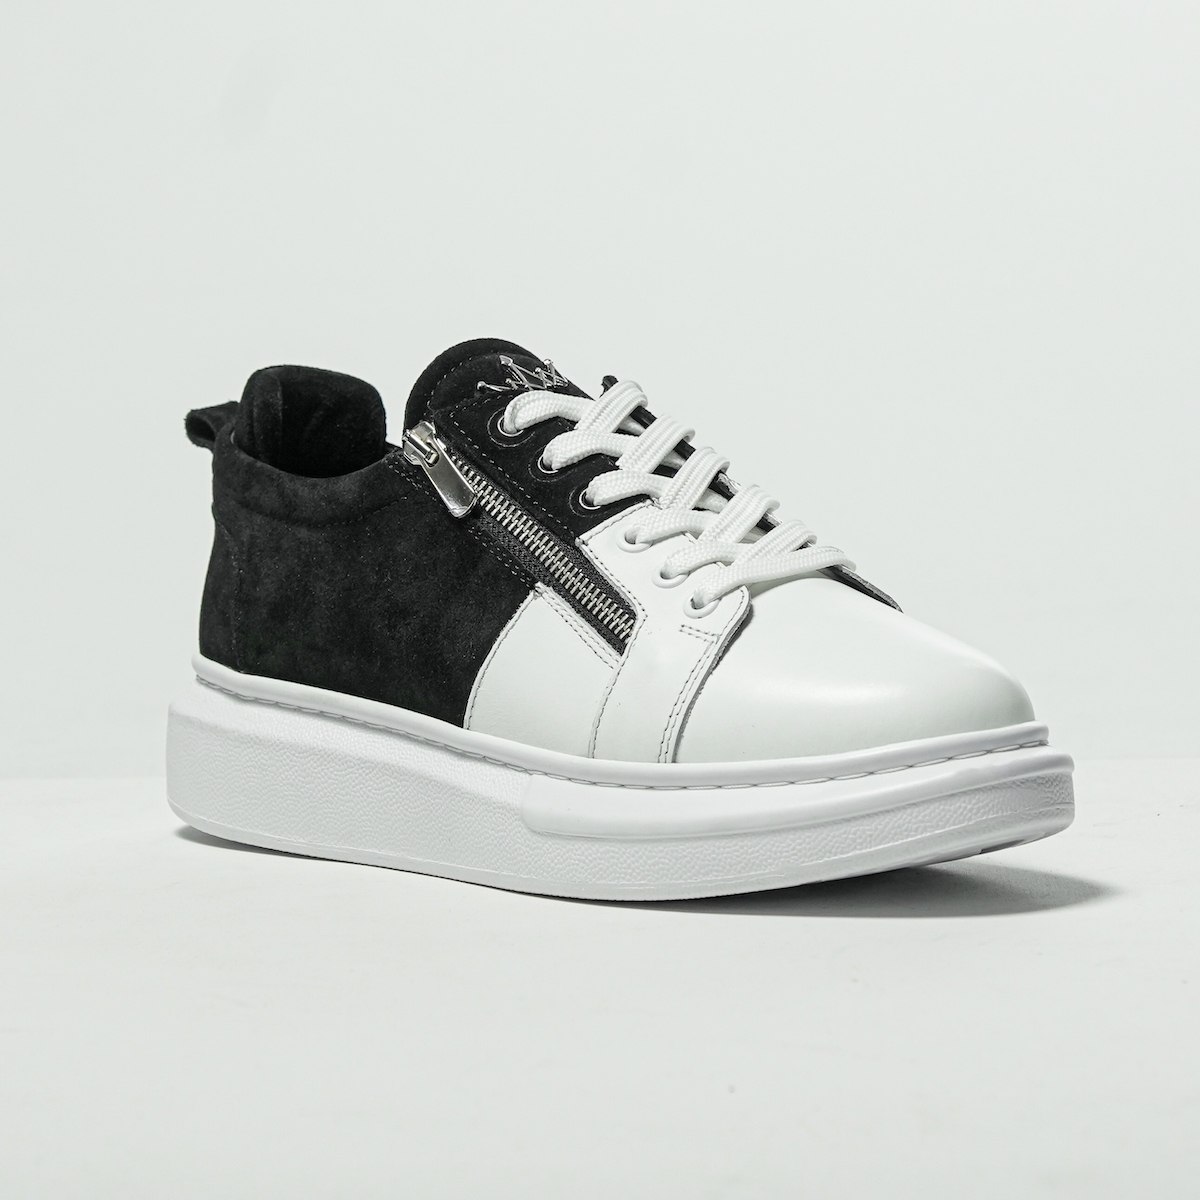 Premium Leather Designer Silver Zipped Sneakers Black White | Martin Valen